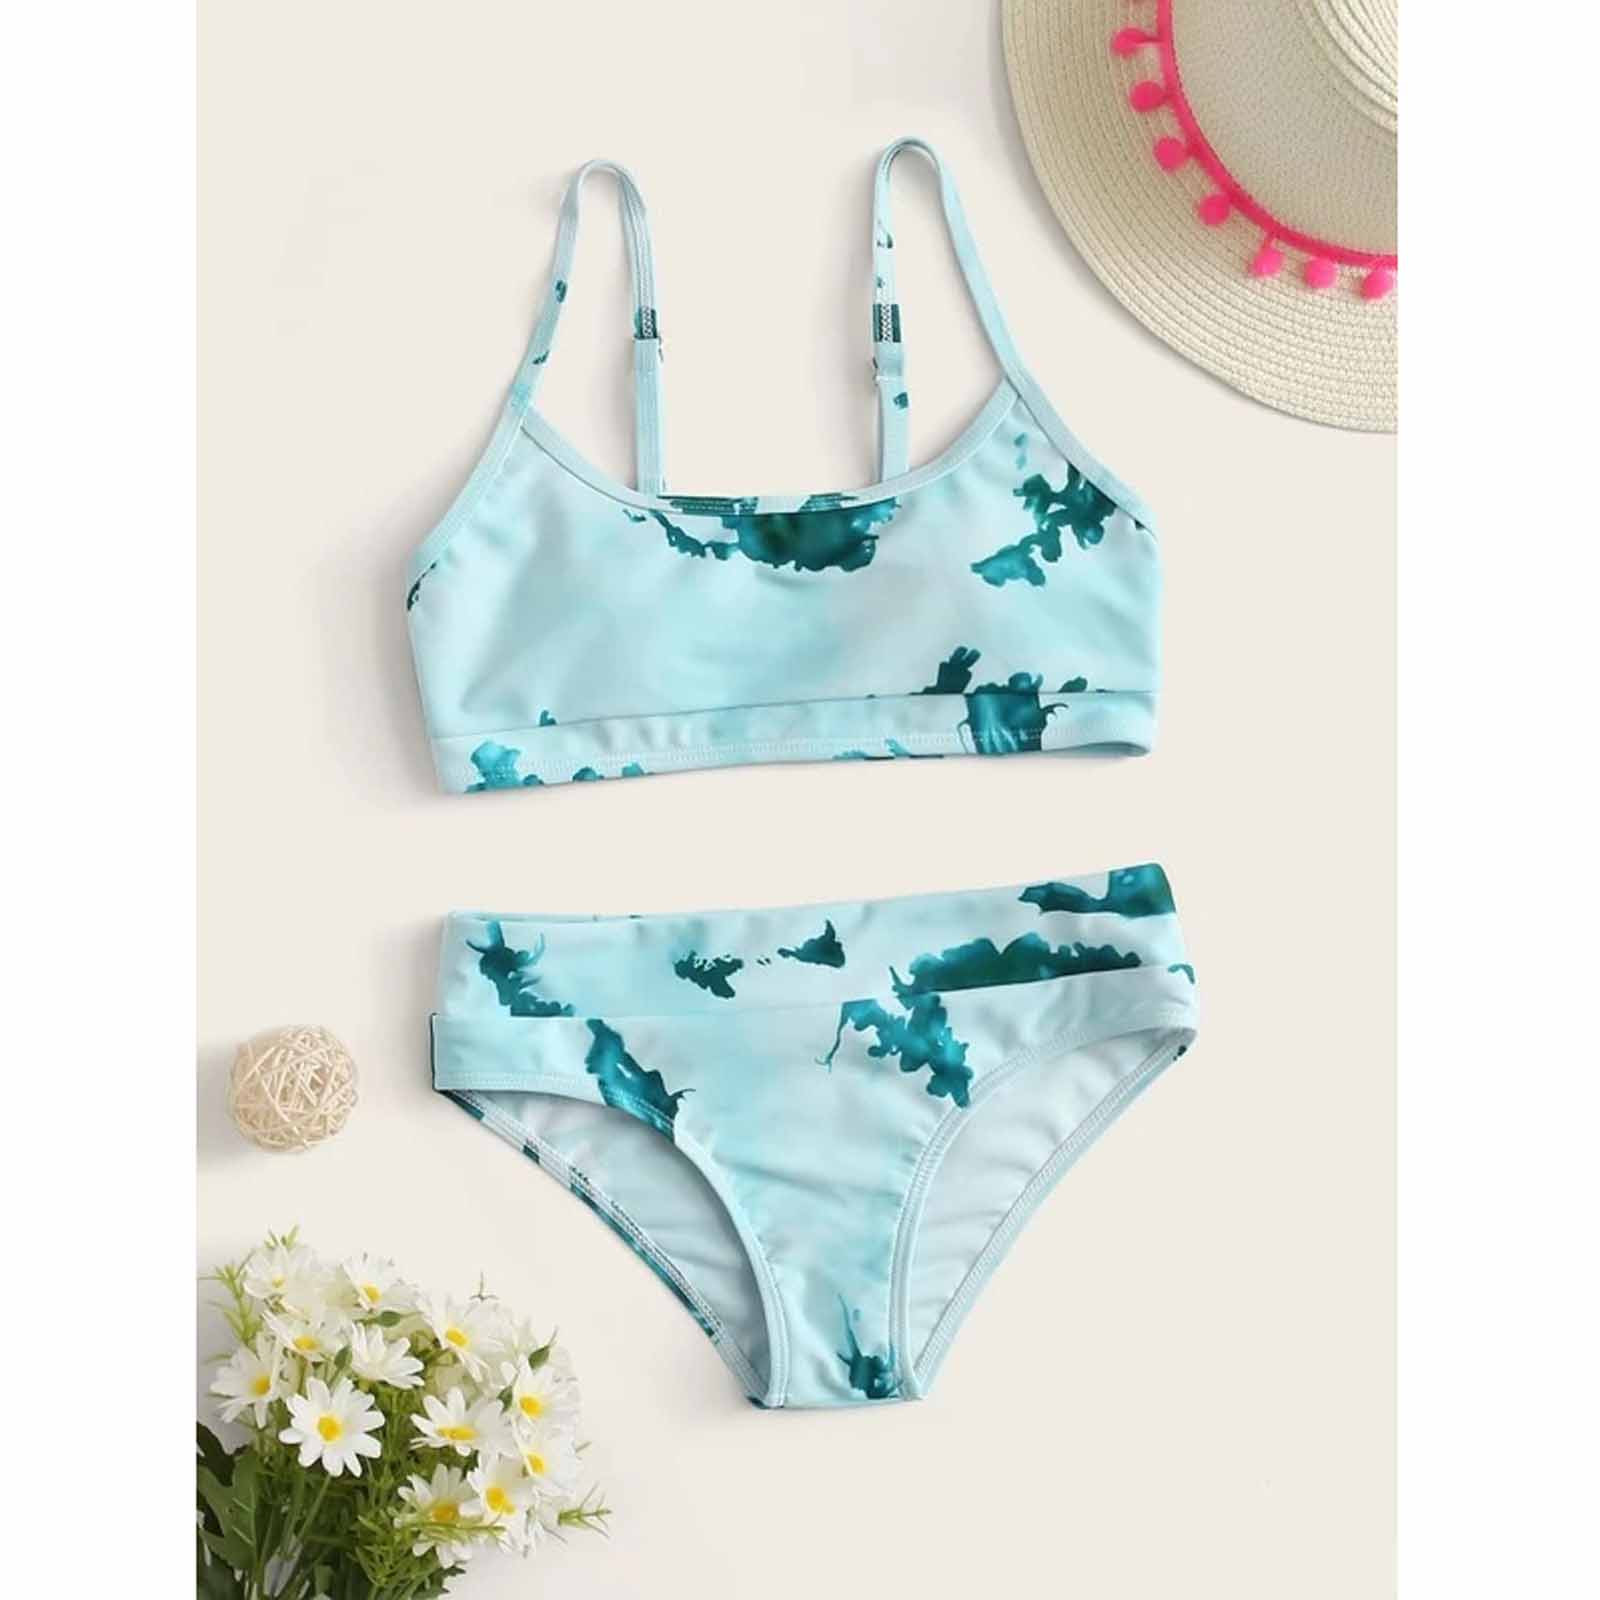 UlyssesAl Toddler Girls Tie-Dye Print Suspender Swimwear Summer 2PCS